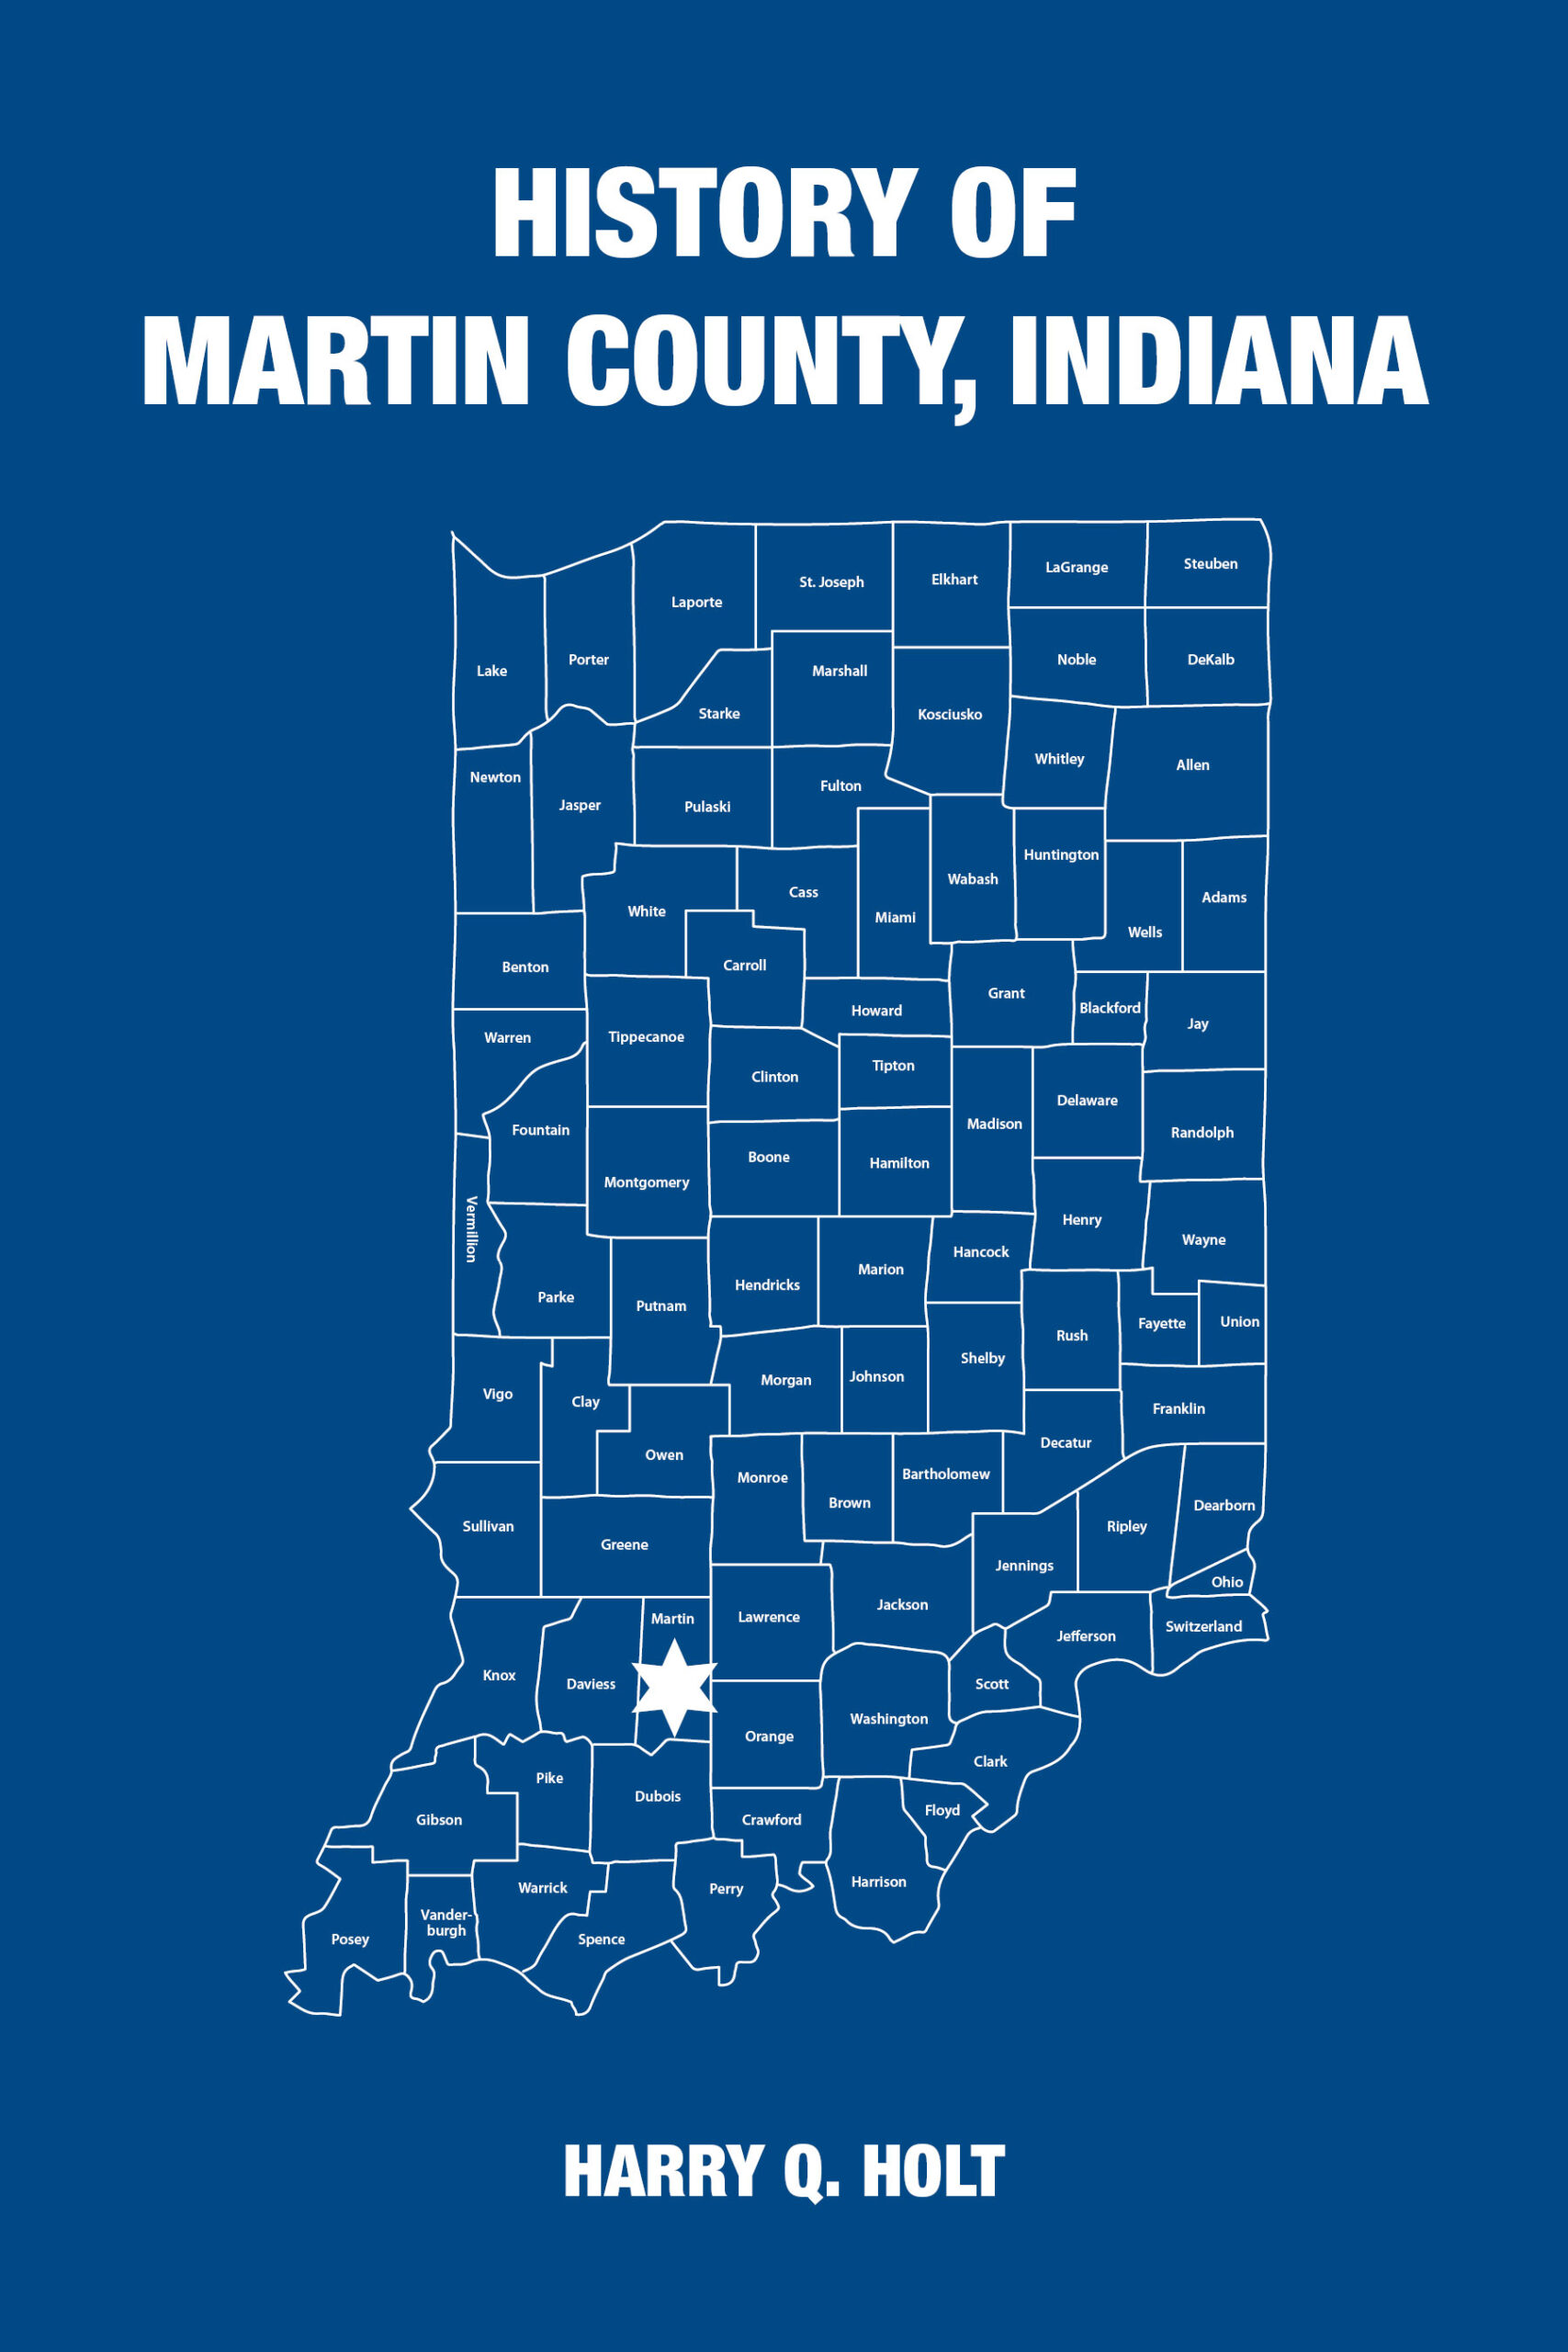 History of Martin County, Indiana (Volume I) by Harry Q. Holt